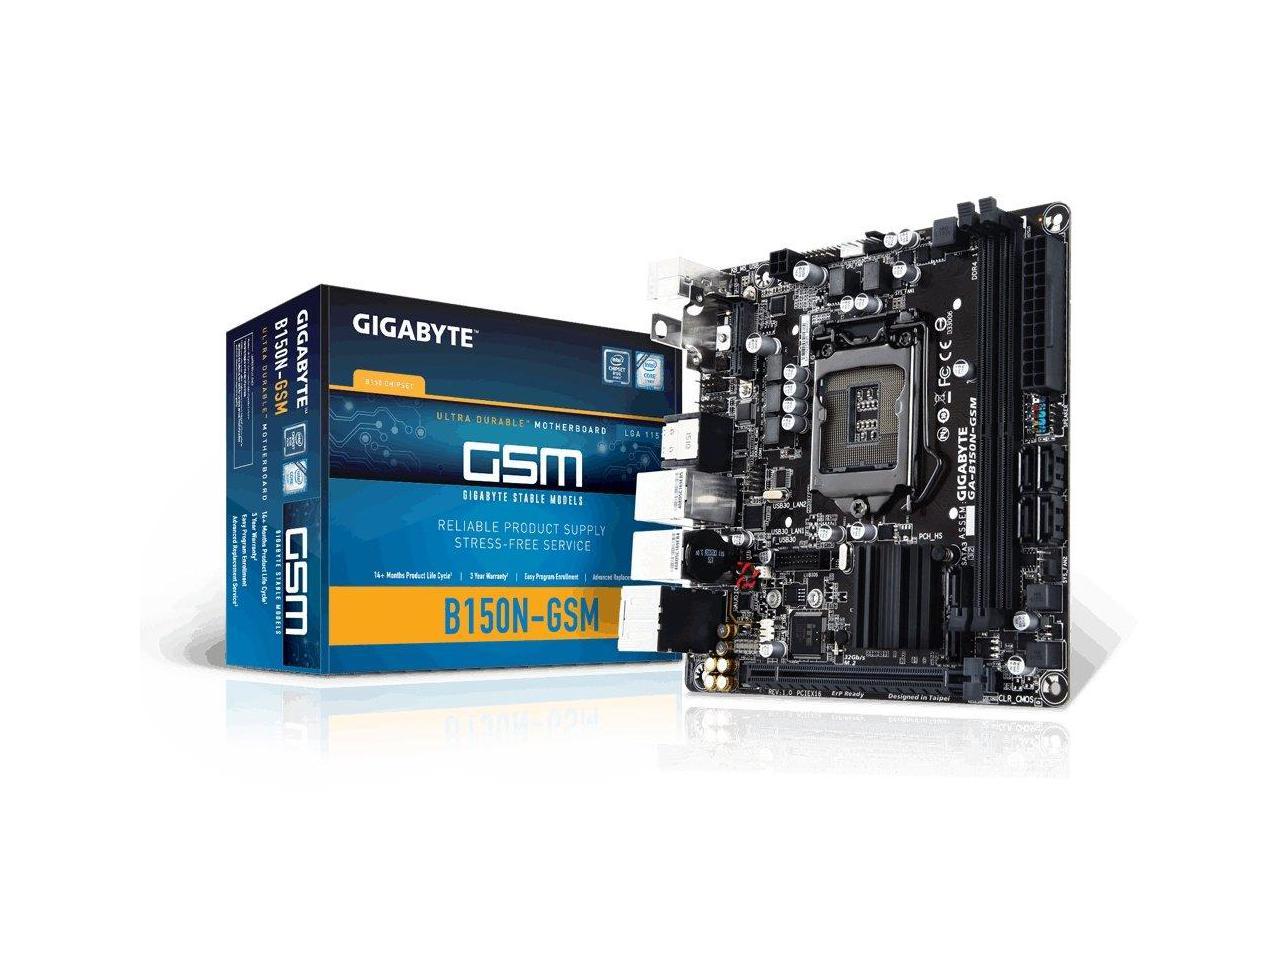 Gigabyte Ultra Durable GA-B150N-GSM Desktop Motherboard - Intel B150 Chipset - Socket H4 LGA-1151